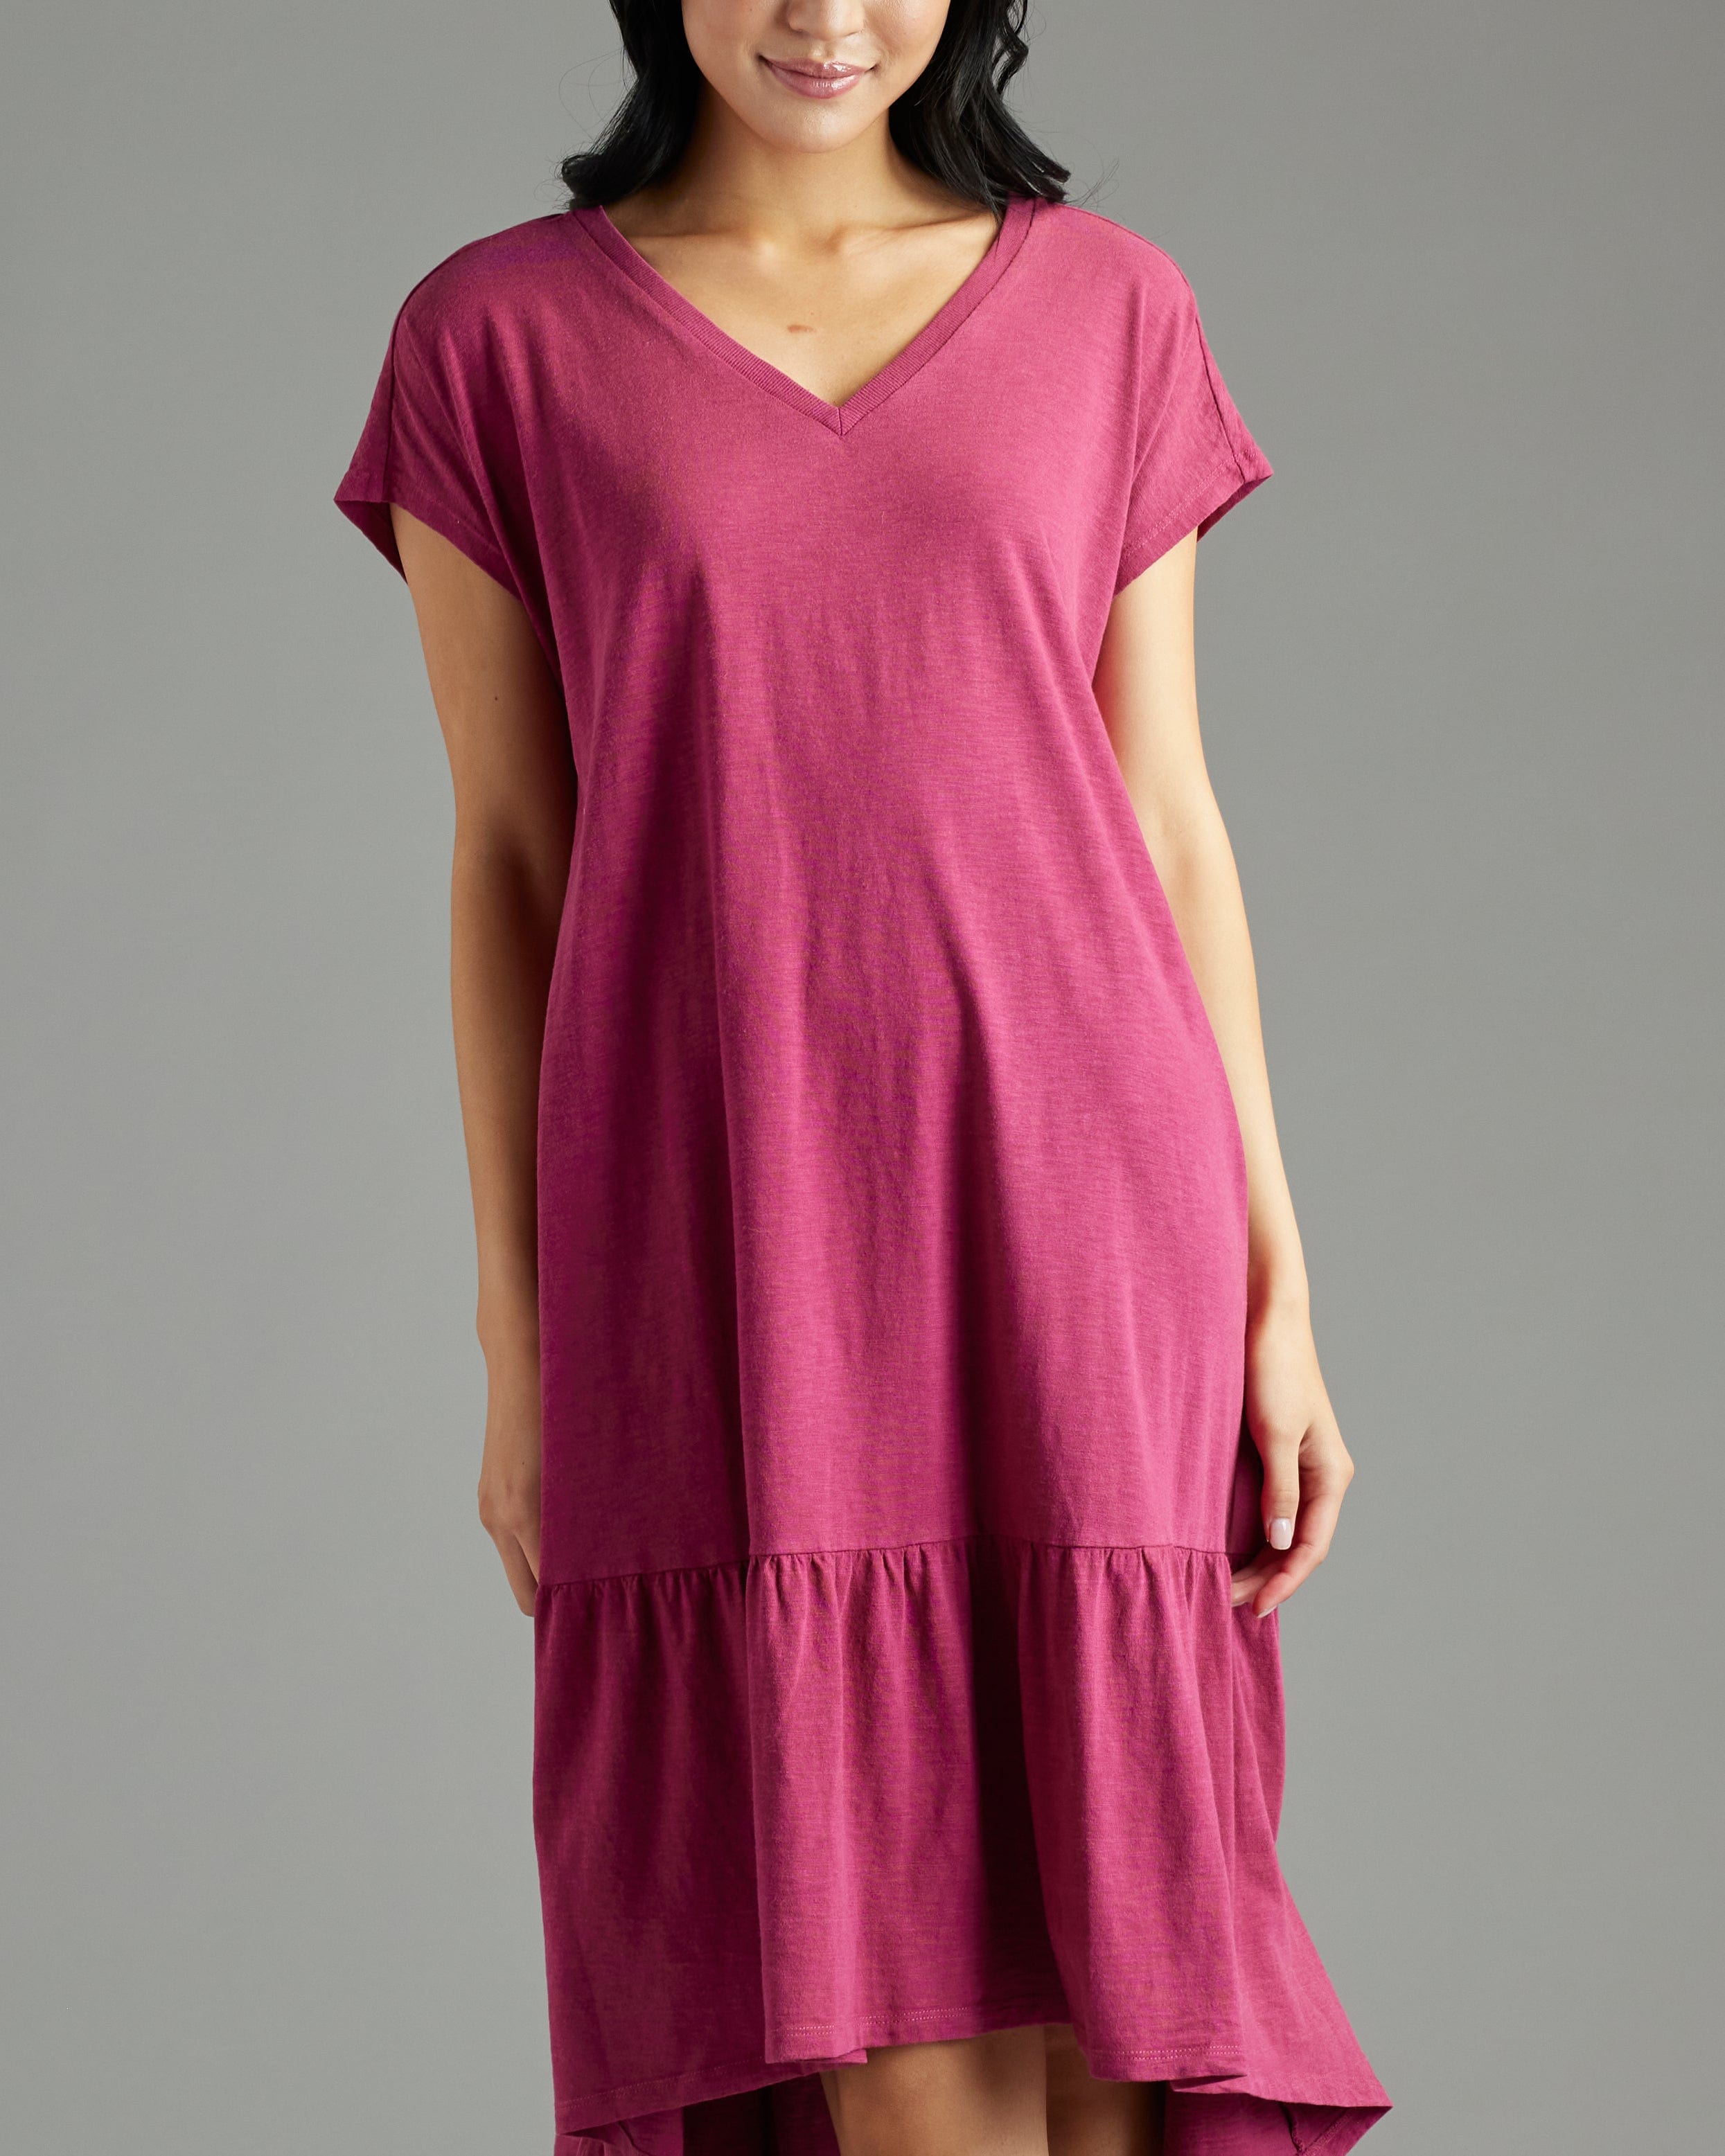 Woman in a short sleeve, v-neck, high-low hem, purple dress